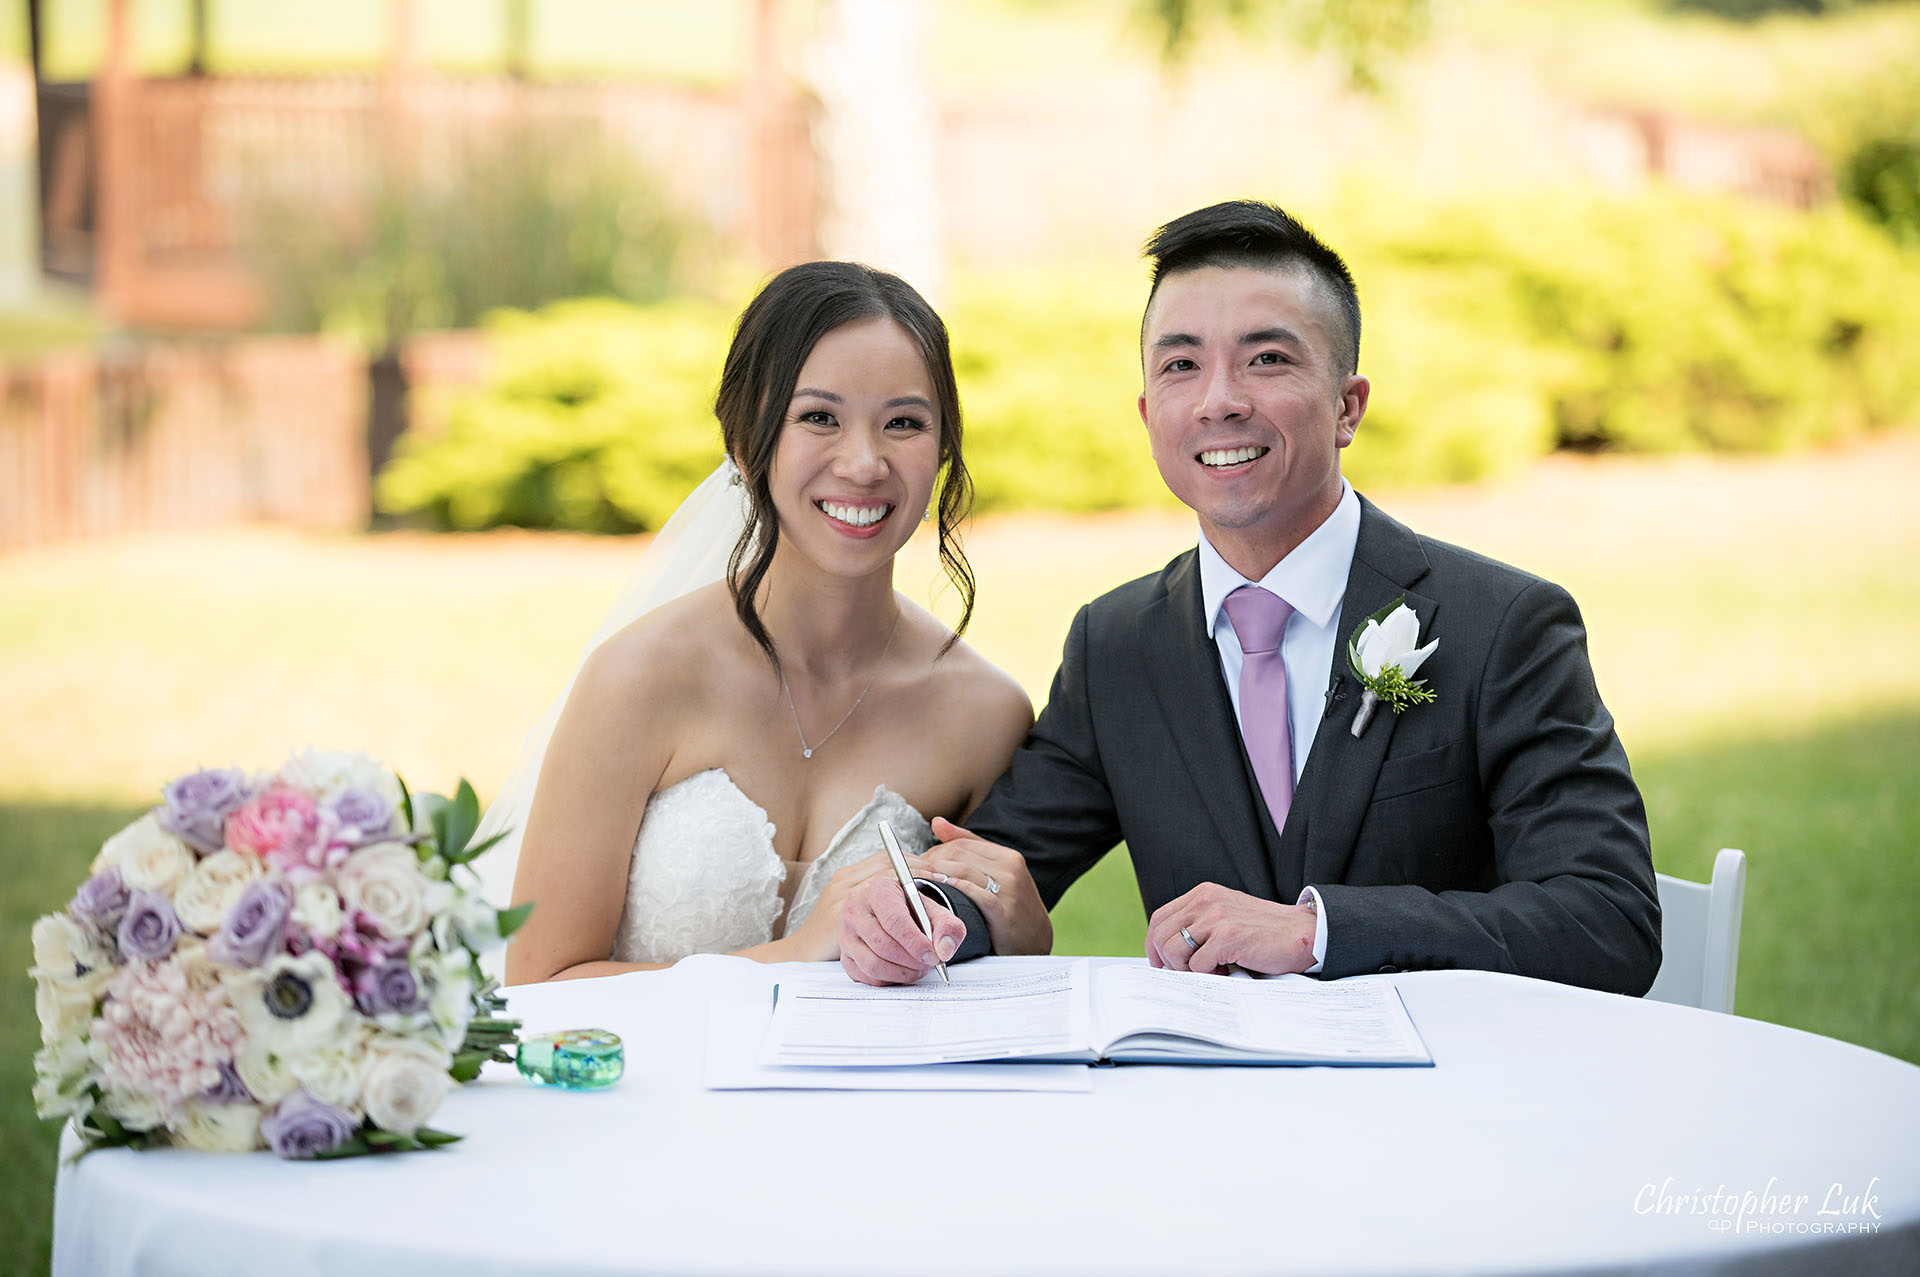 Toronto Wedding Photography The Manor Elizabeth Hall Tent Ceremony Bride Groom Signing Register Document Smile